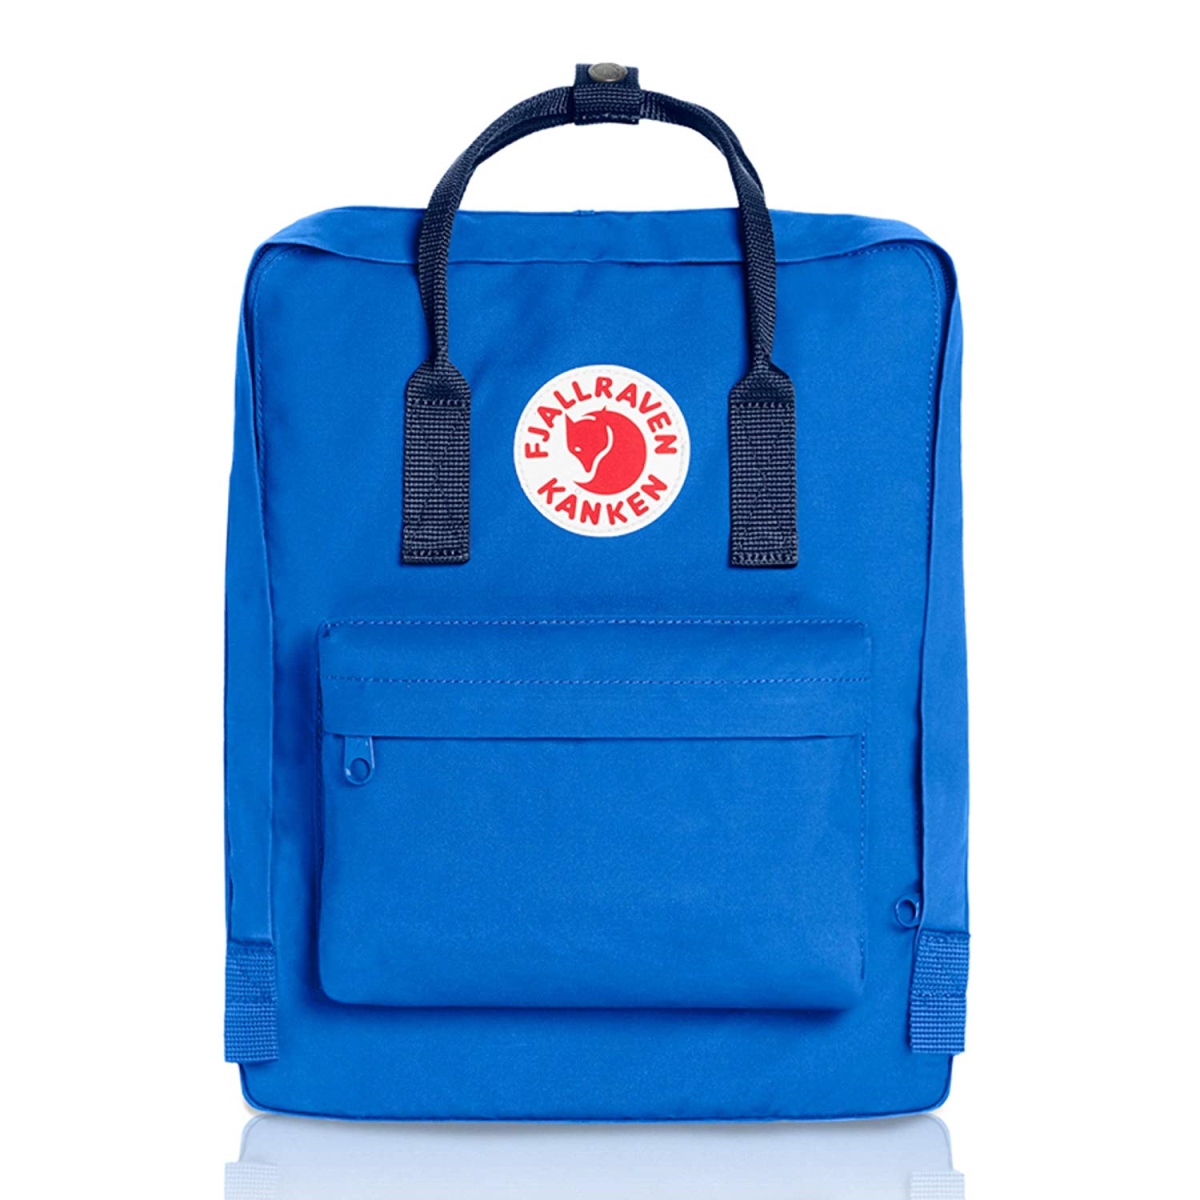 23510-525-560 13 Cm Kanken Classic Backpack For Everyday - Un Blue & Navy